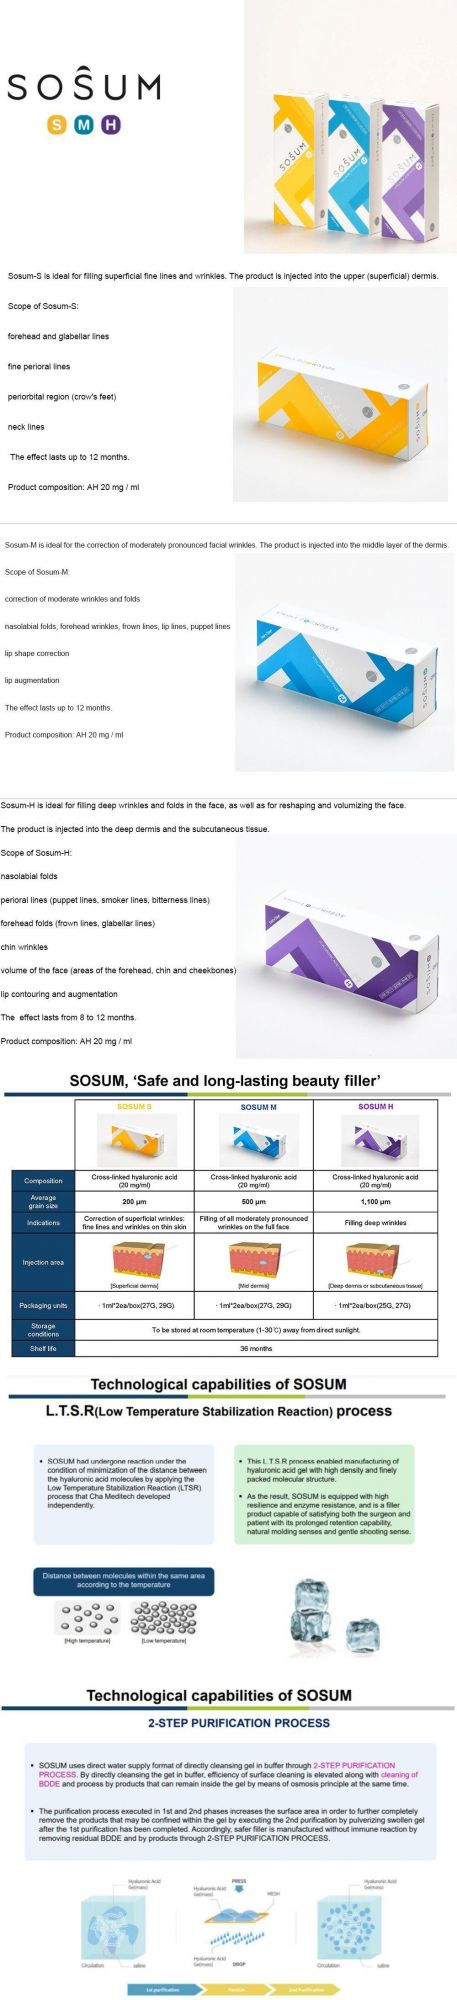 Trendy Original CE Korea Brand Sosum Filler Hyaluronic Acid Dermal Filler for Skin Rejuvenation